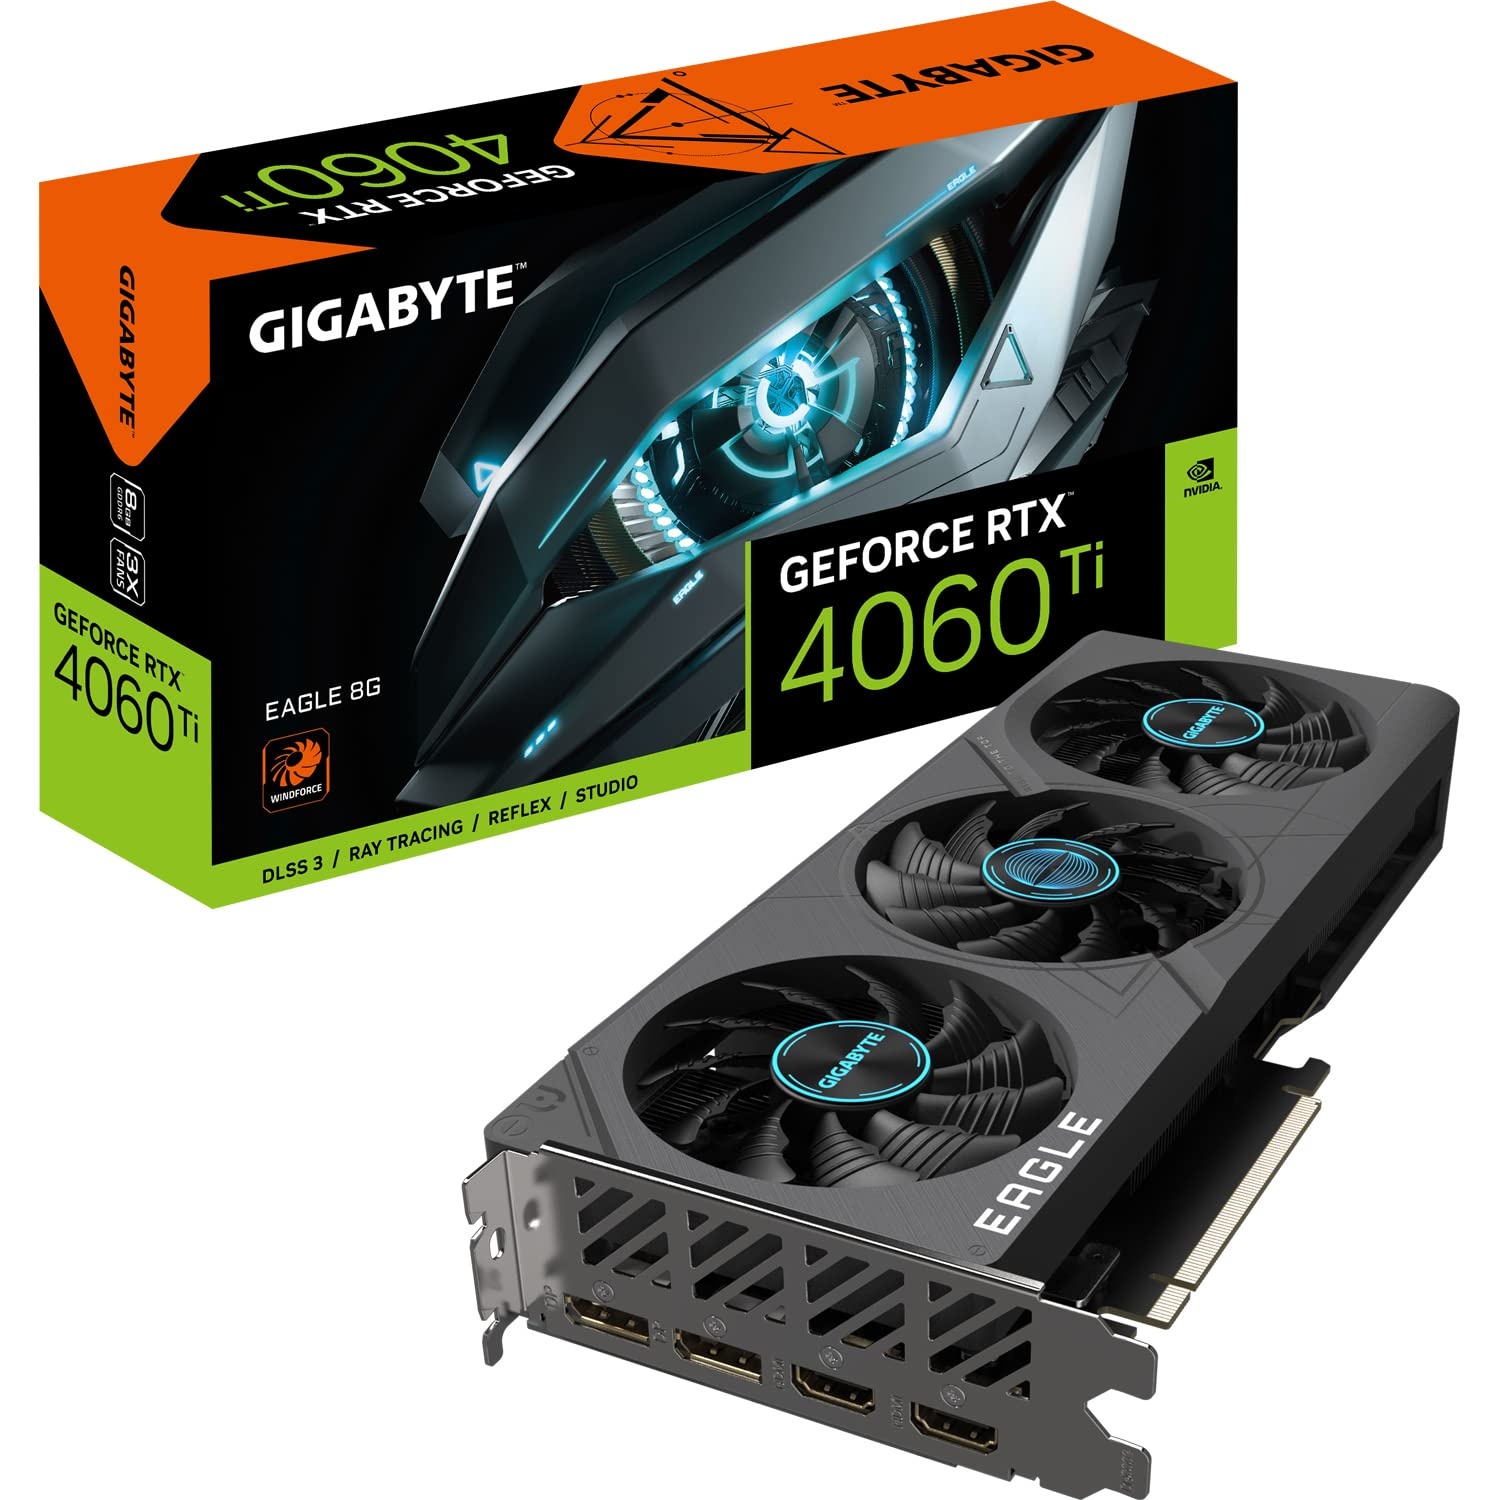 GIGABYTE GeForce RTX 4060 TI EAGLE 8GB Graphics Card - GDDR6 18Gbps 128bit, PCI-E 4.0, 2x DisplayPort 1.4, 2x HDMI 2.1a, NVIDIA DLSS 3, Supports 4K, Ada Lovelace Arch, GV-N406TEAGLE-8GD